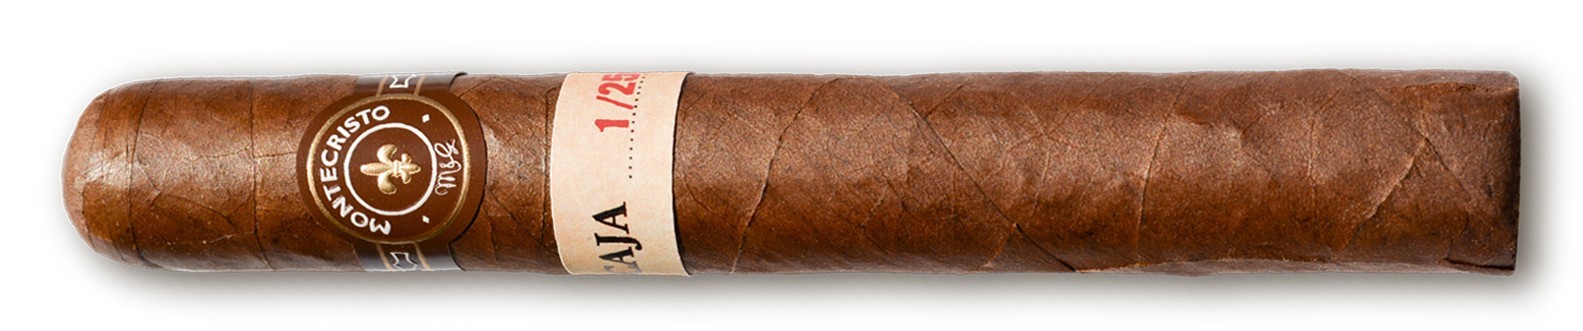 Montecristo Grupo de Maestros Private Reserve single cigar horizontal